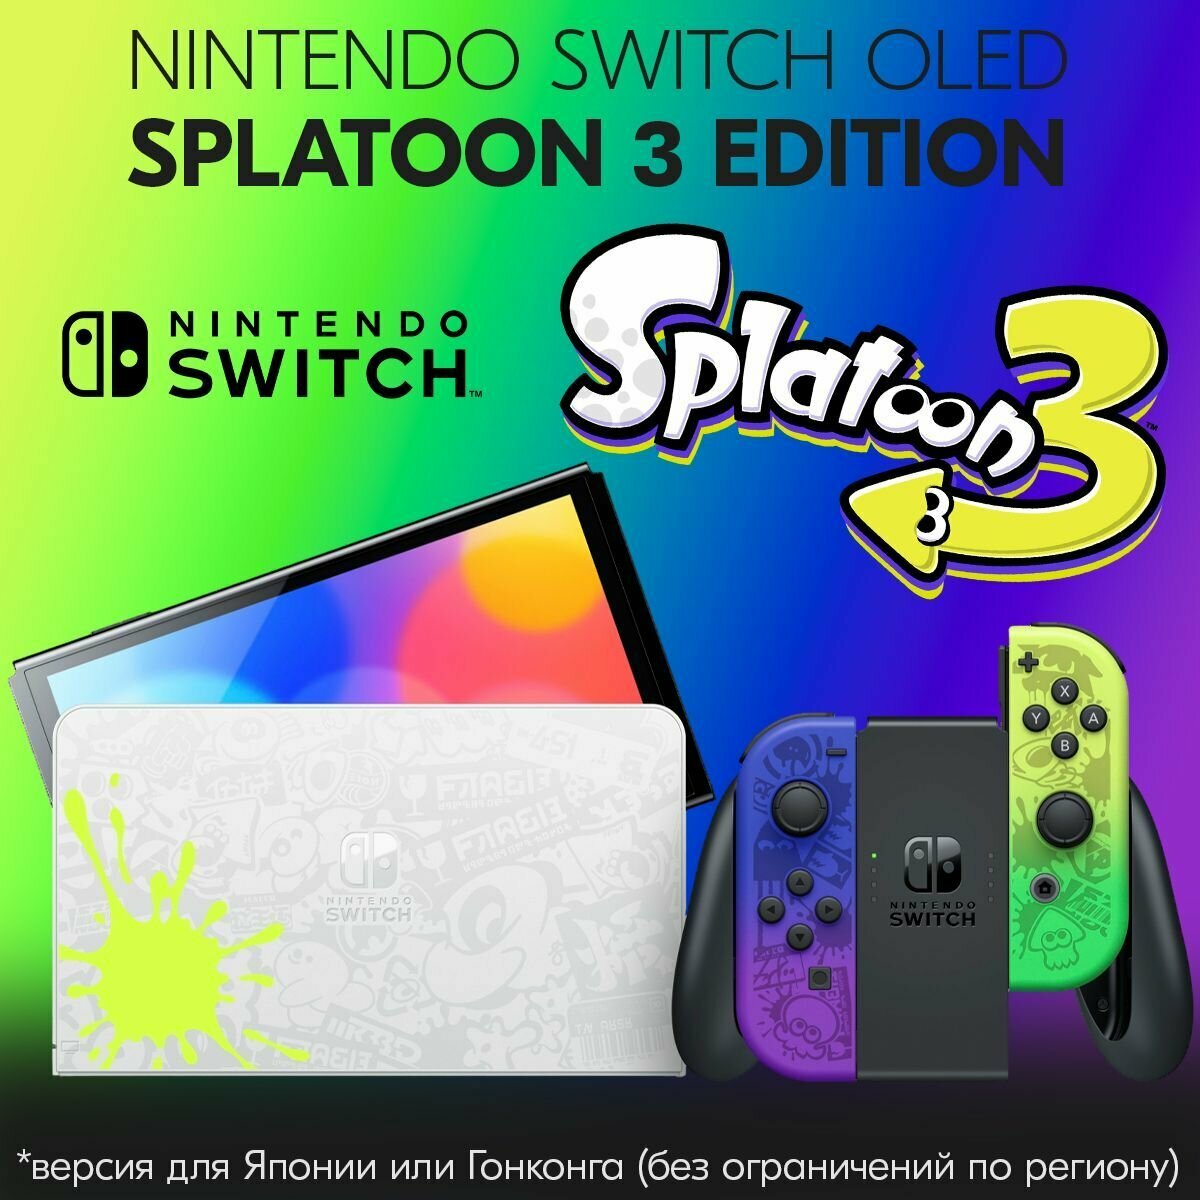 Консоль Nintendo Switch OLED Splatoon 3 Edition